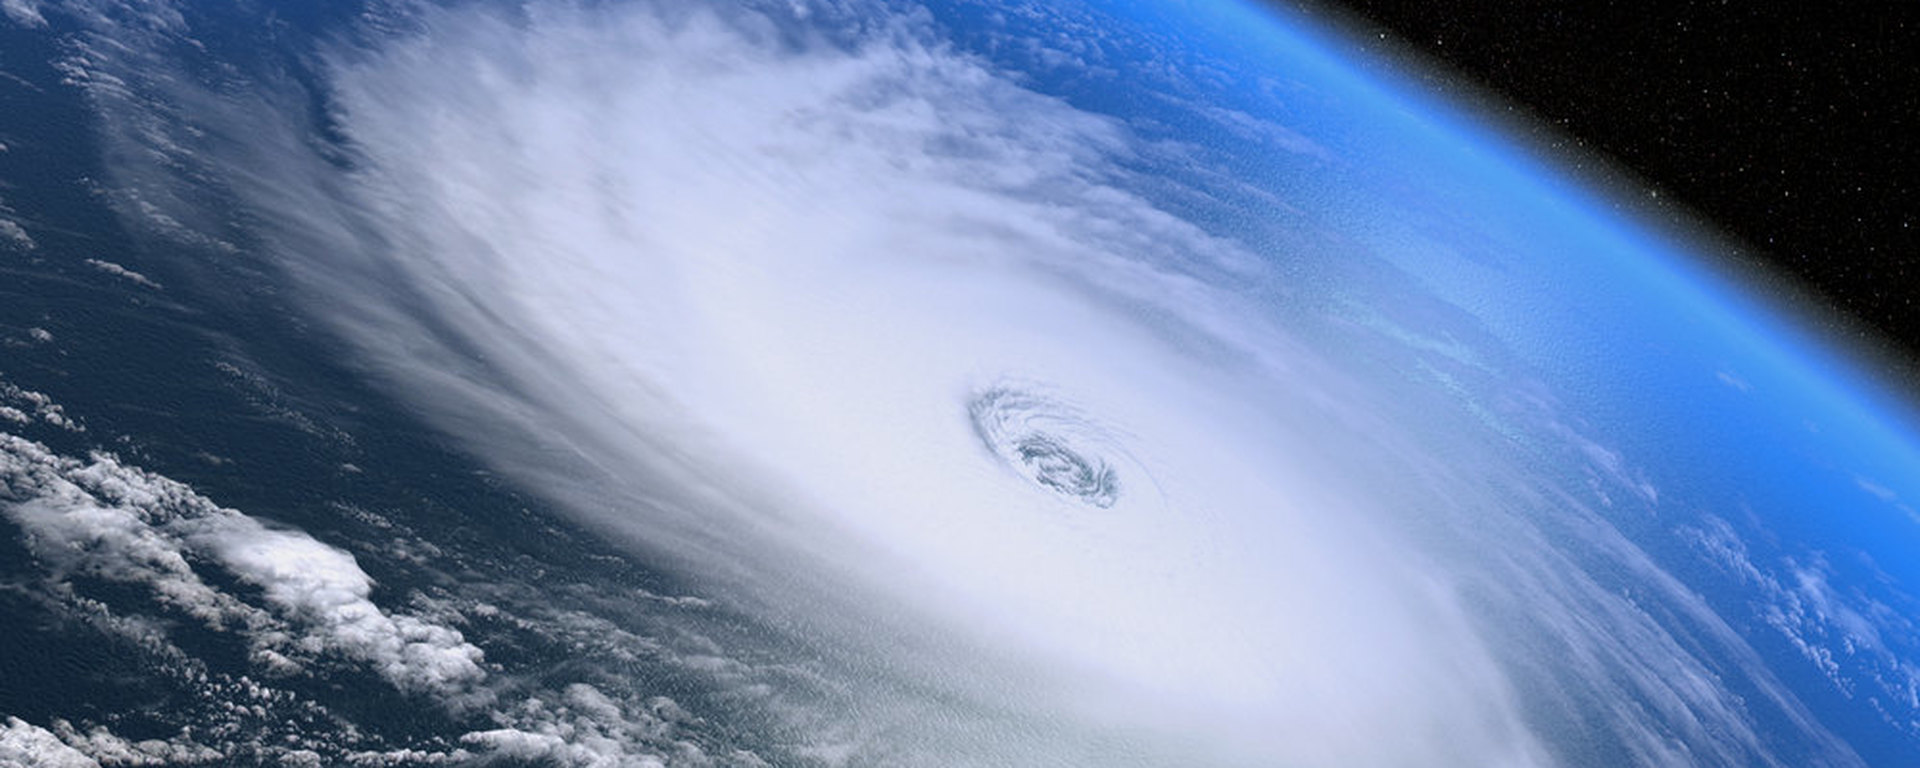 В Вашингтоне объявили режим ЧП из-за урагана "Флоренс"